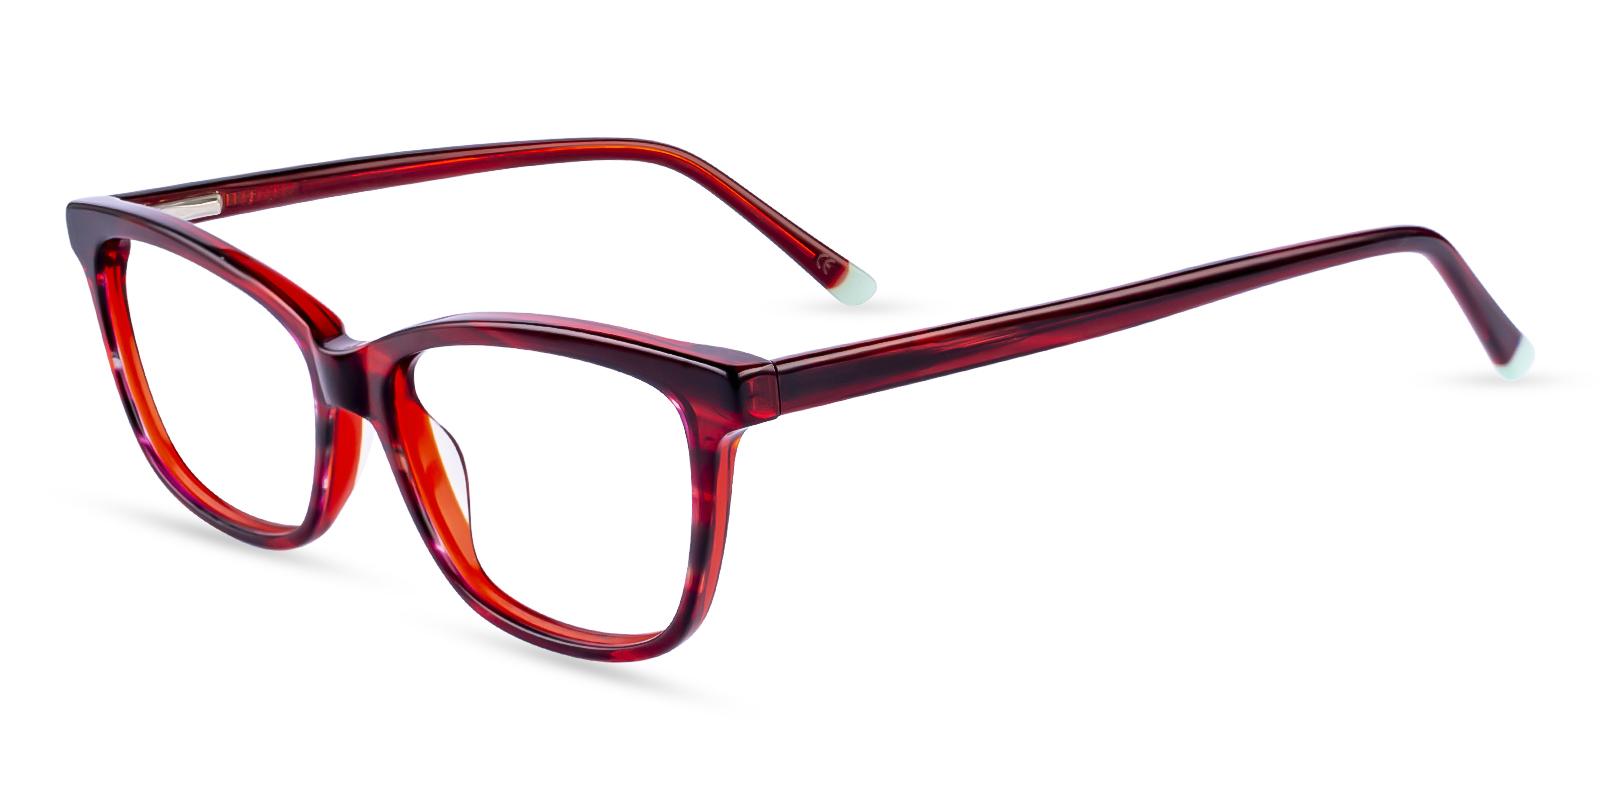 Zion Red Acetate Eyeglasses , SpringHinges , UniversalBridgeFit Frames from ABBE Glasses